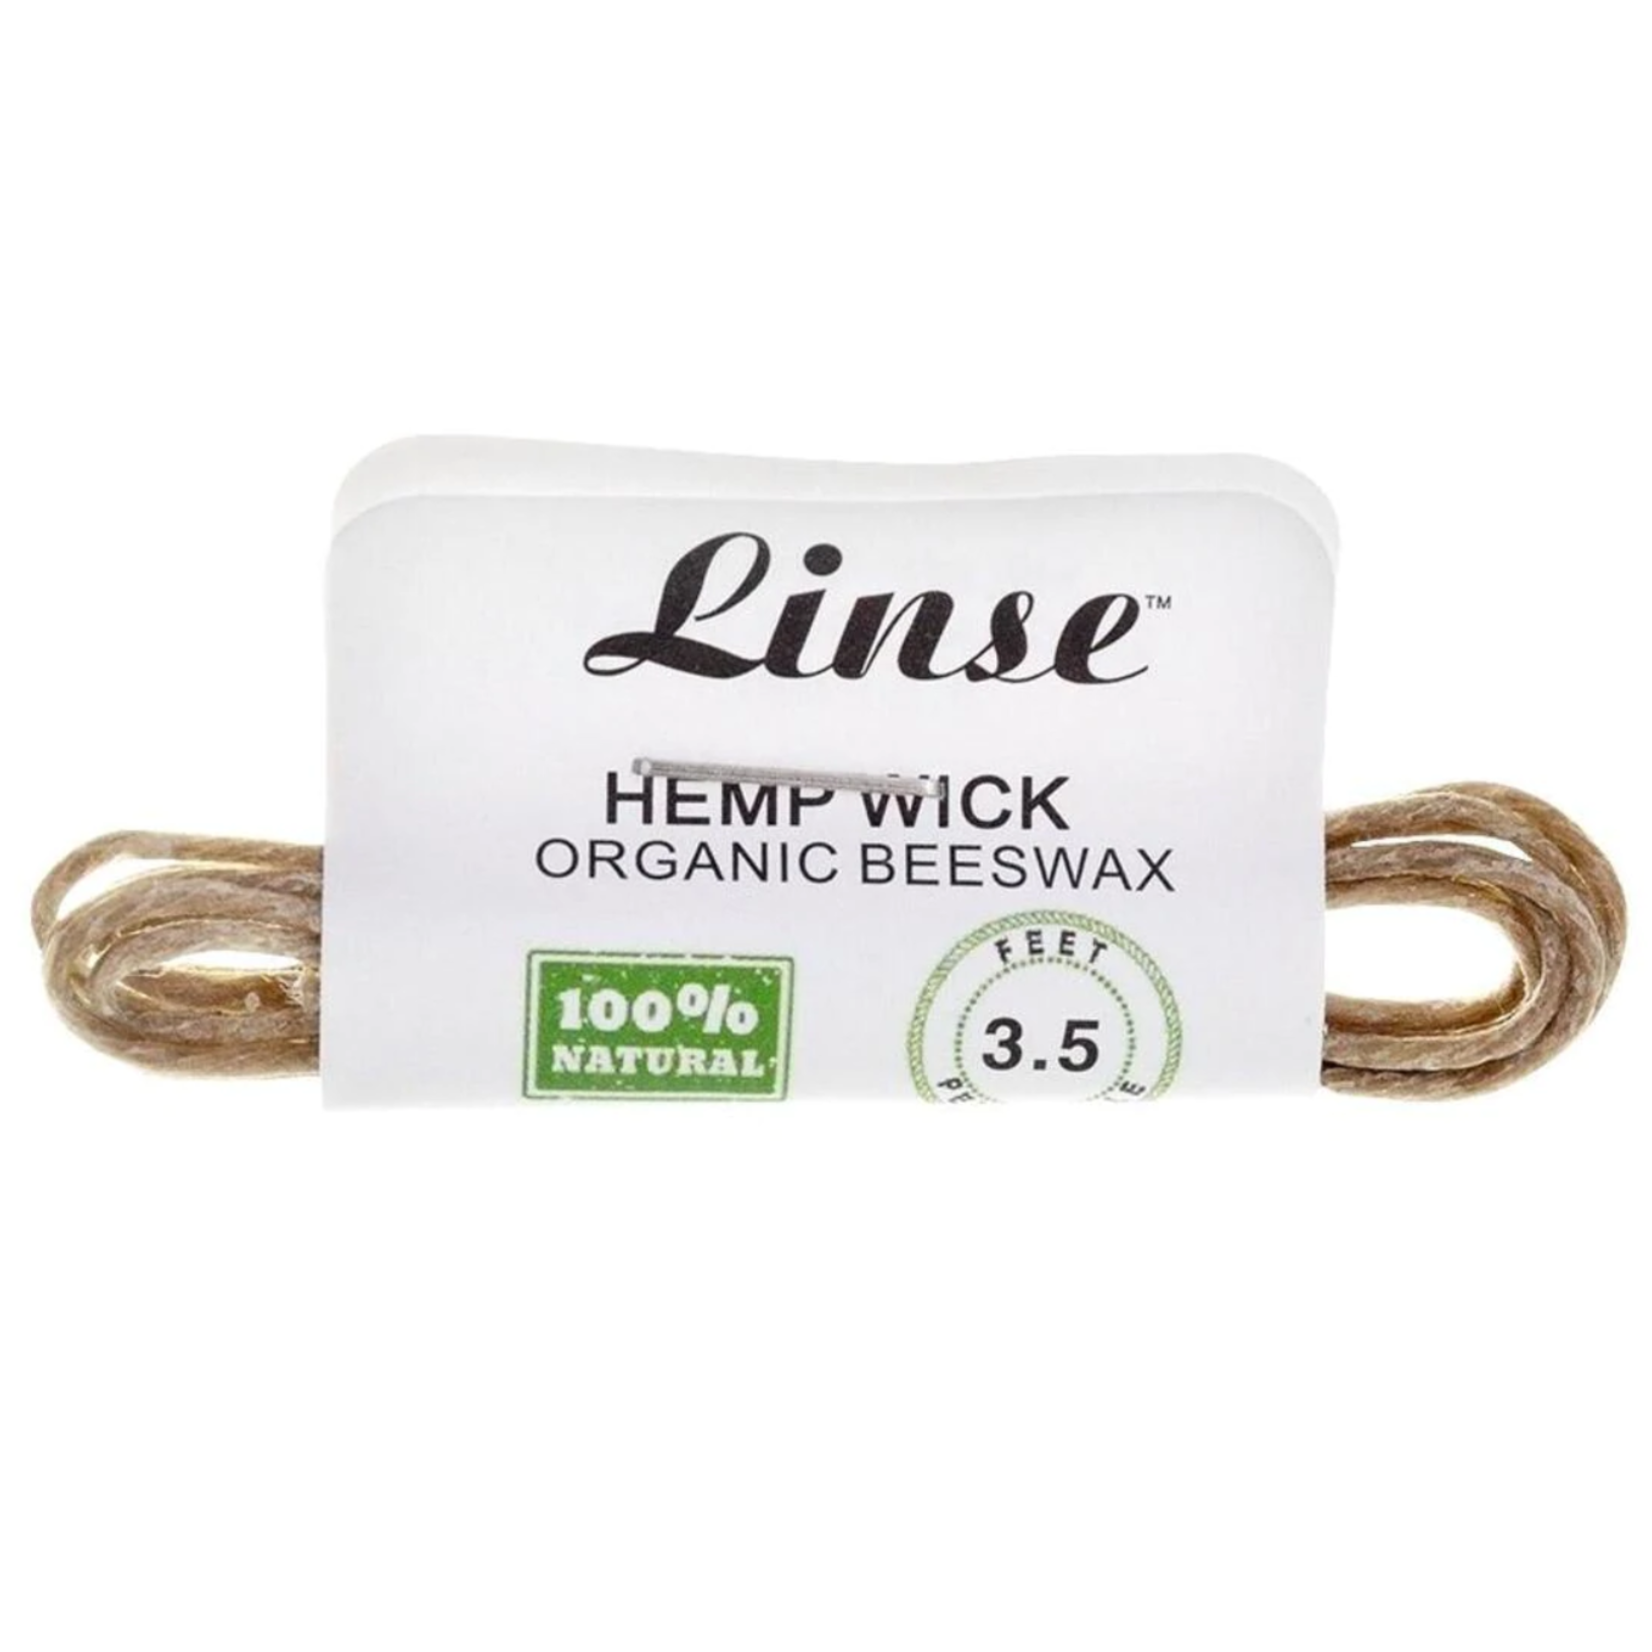 Linse Organic Beeswax Hemp Wick - 3.5 Feet per Bundle